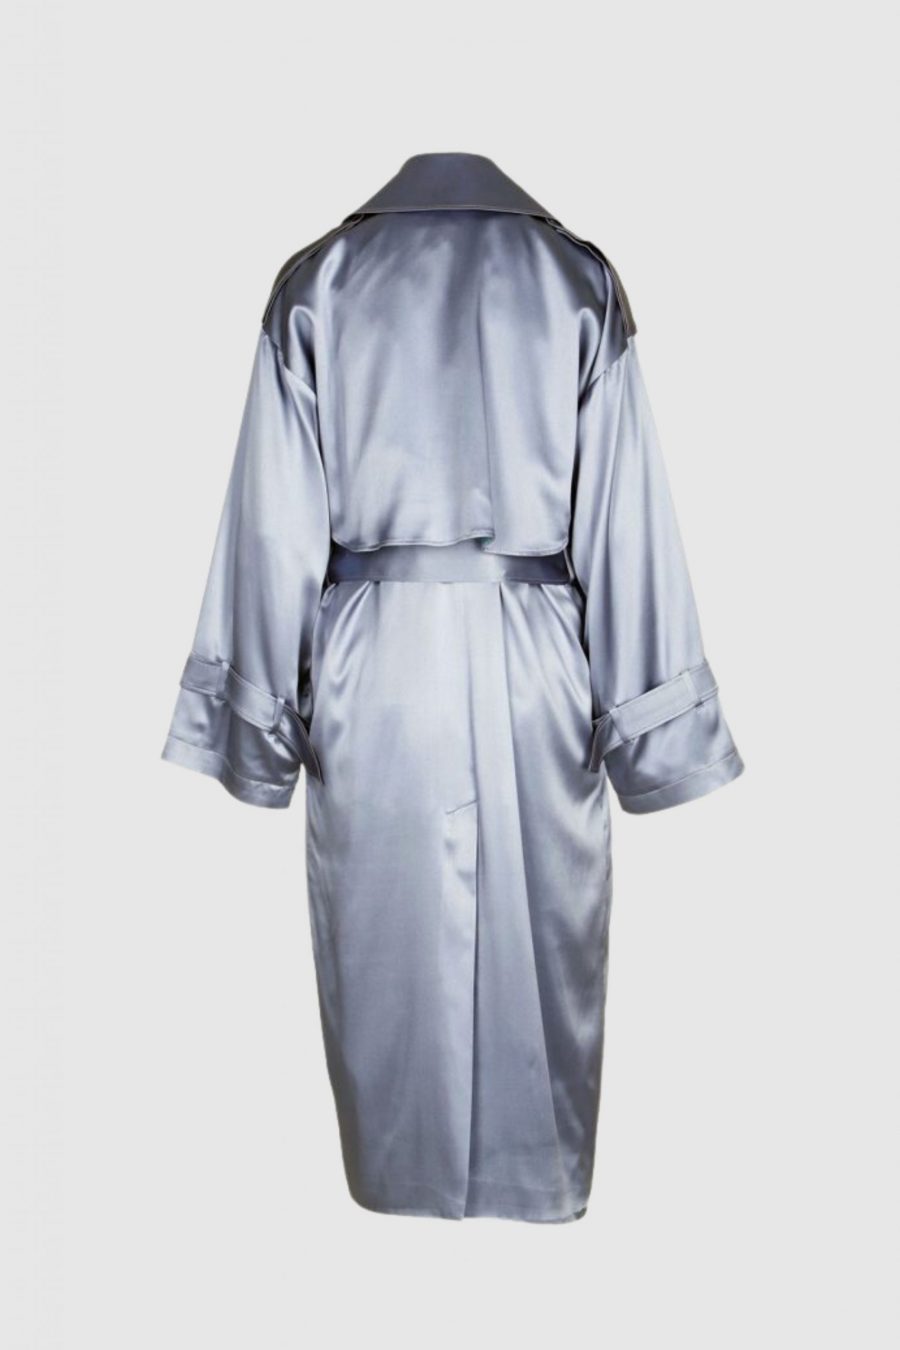 Trenchcoat, Mantel aus Seide, Oversize, leichtes Material, Seide, lila, blau, creme, weiß, casual Look, design